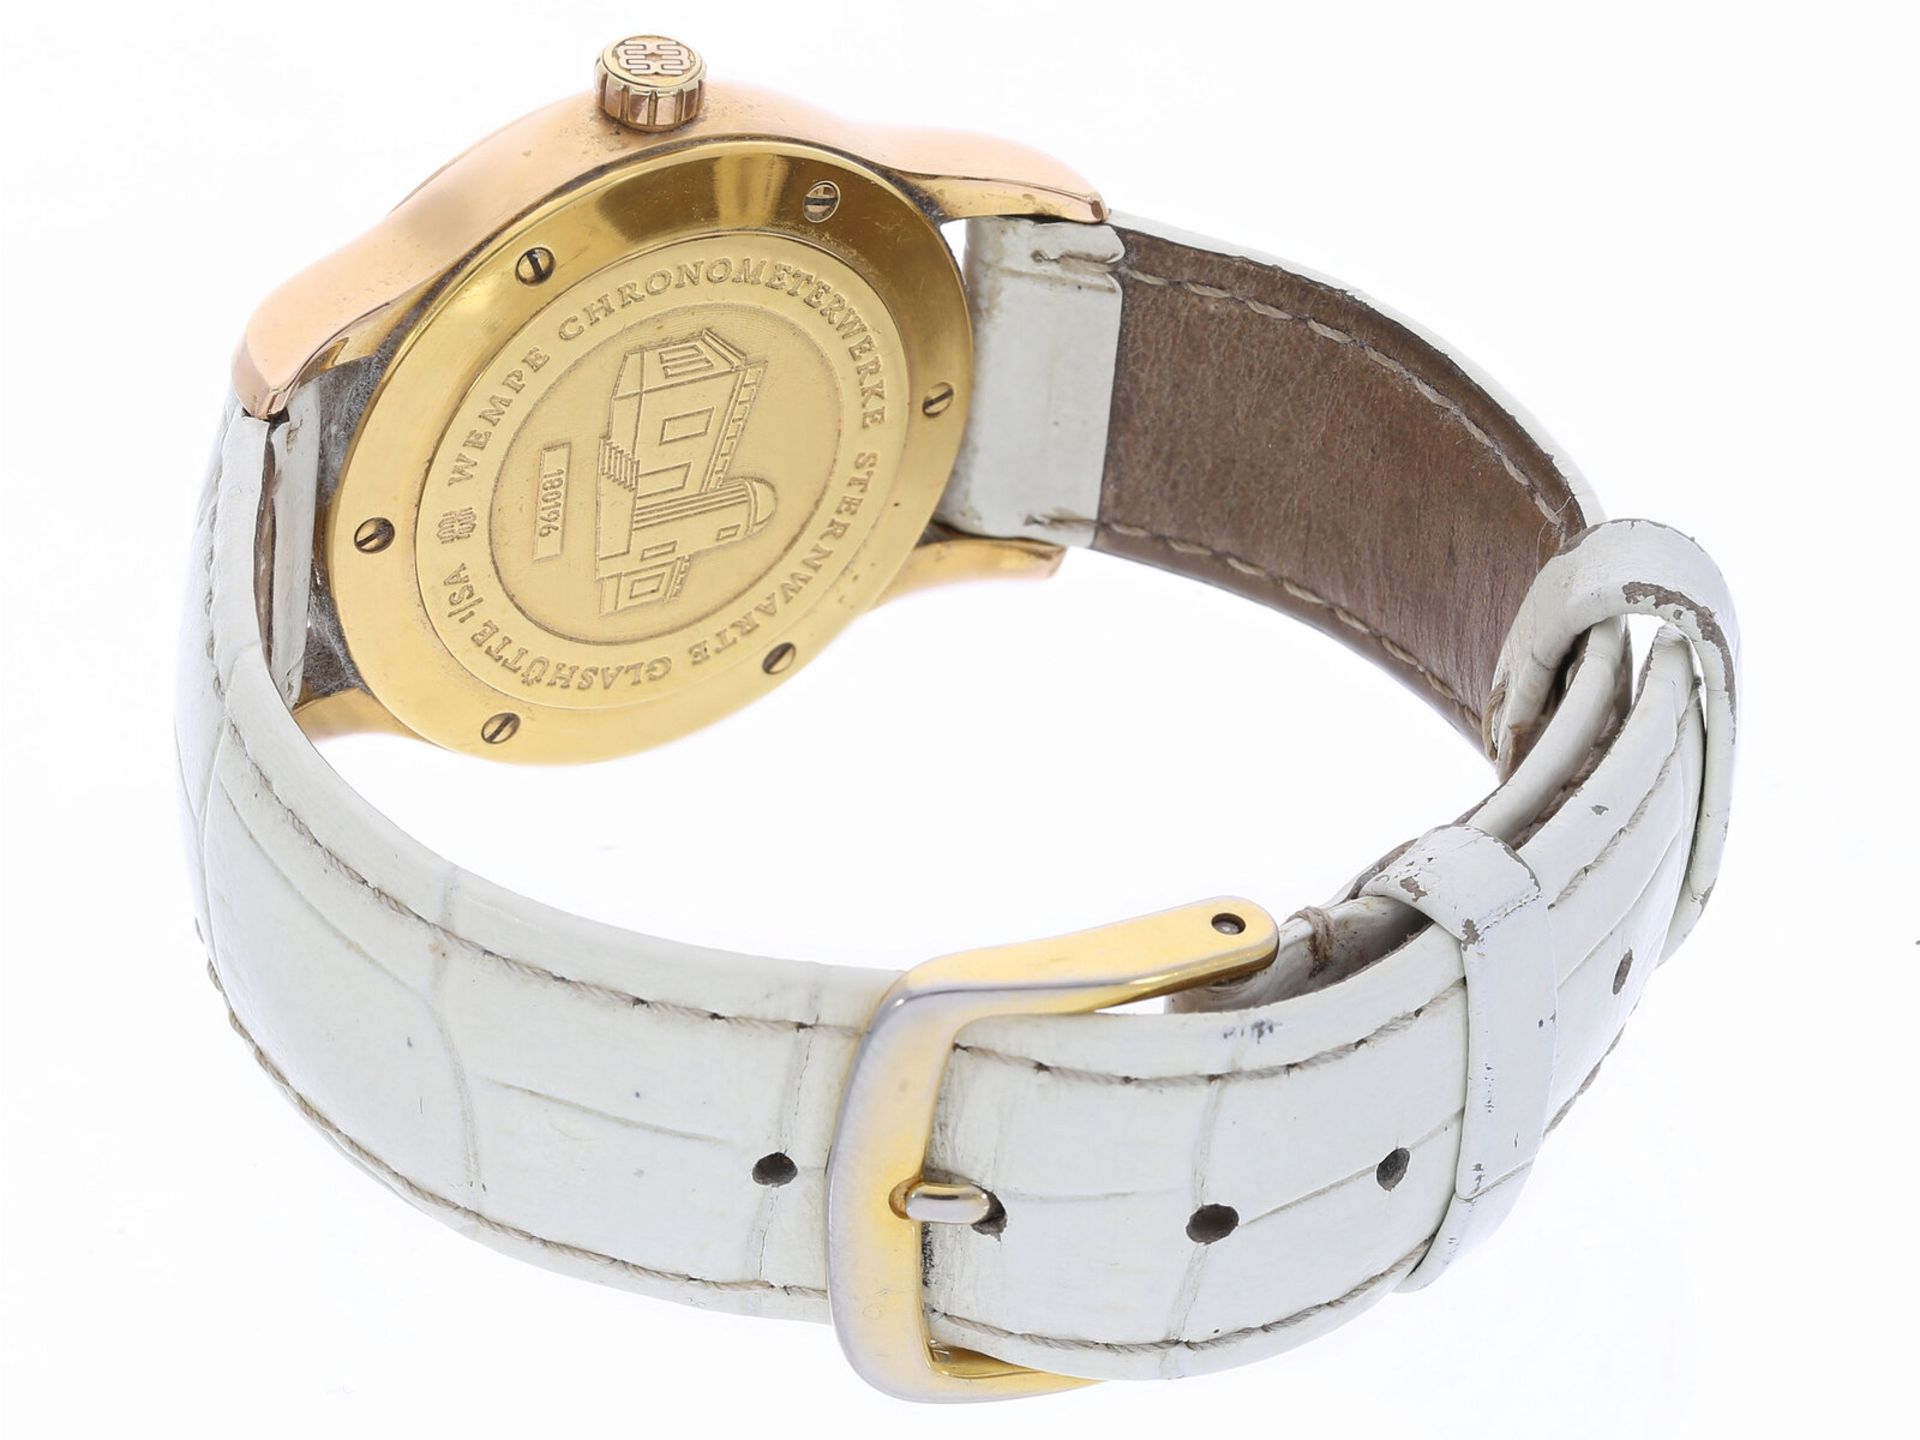 Armbanduhr aus dem Hause Wempe, Zeitmeister Chronometer Glashütte, Edelstahl, vergoldet - Bild 2 aus 2